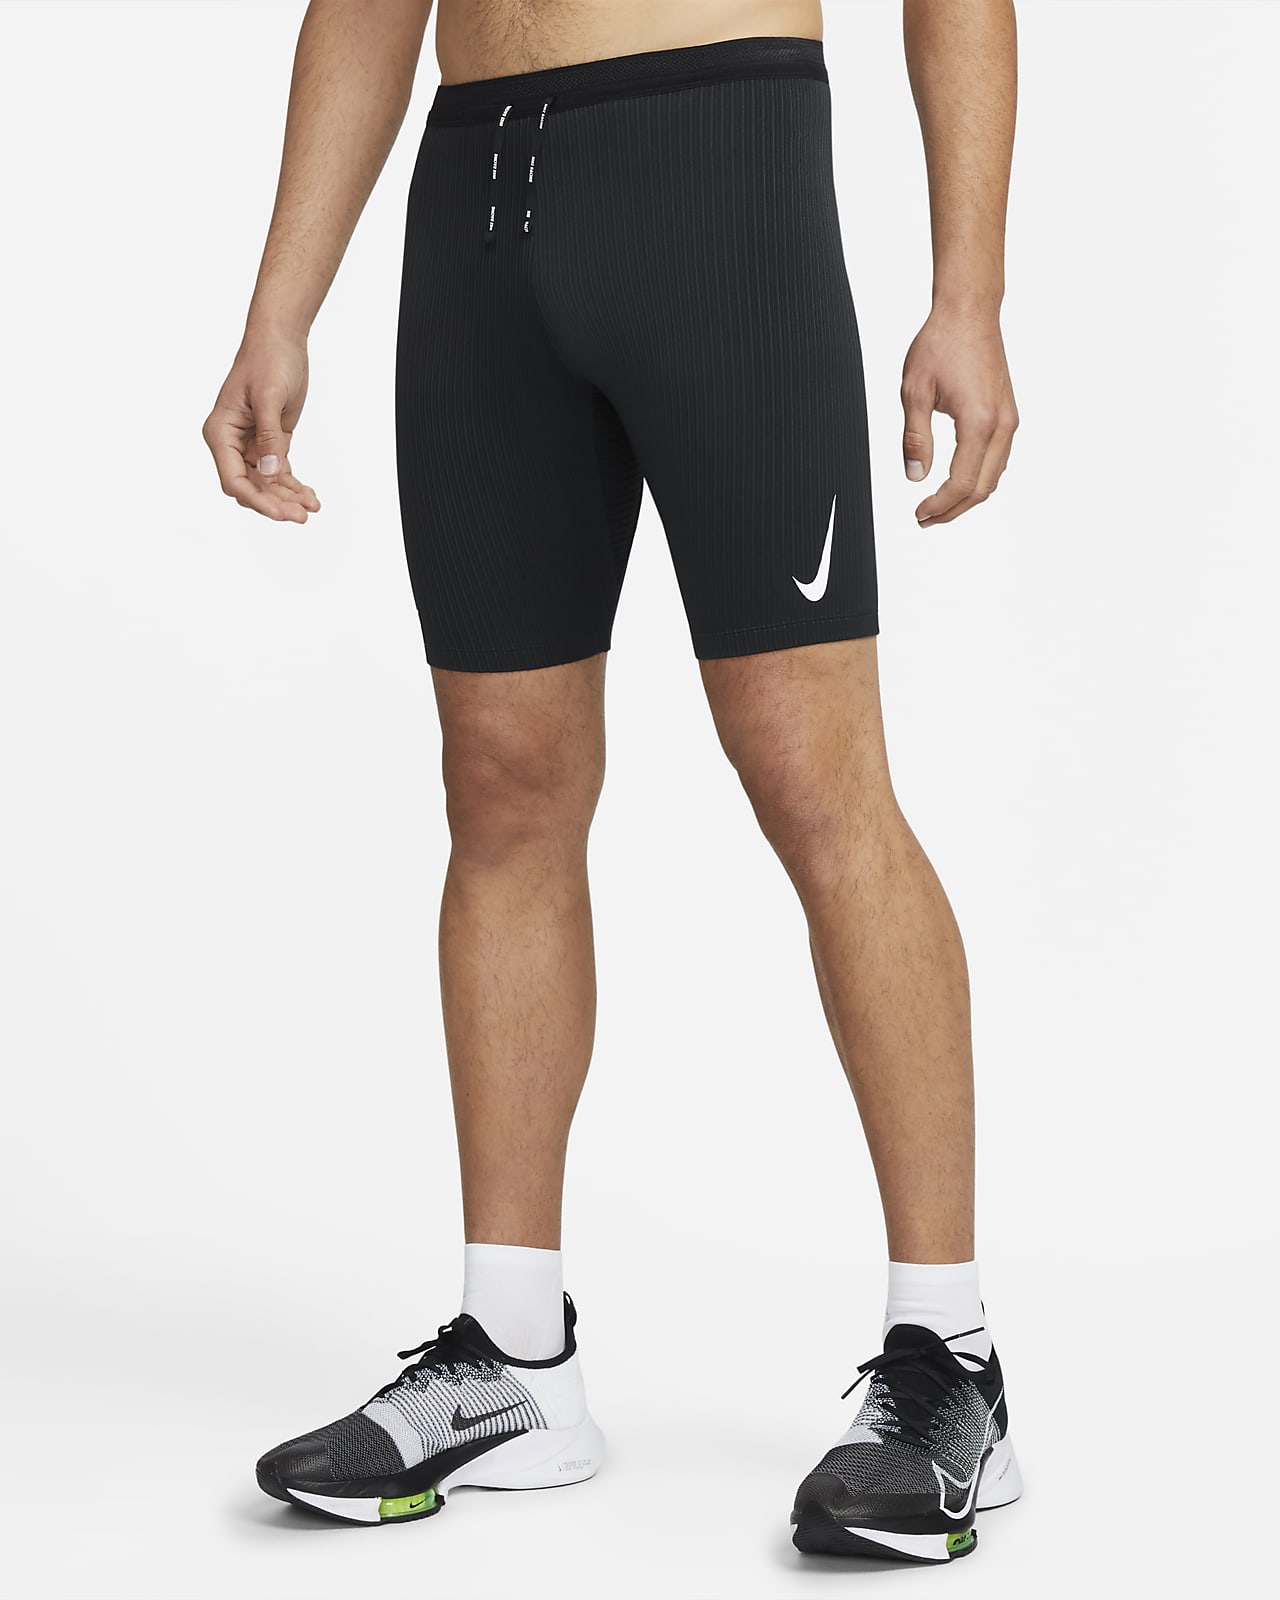 Nike Aeroswift Half tights Men's Medium : r/therunningrack